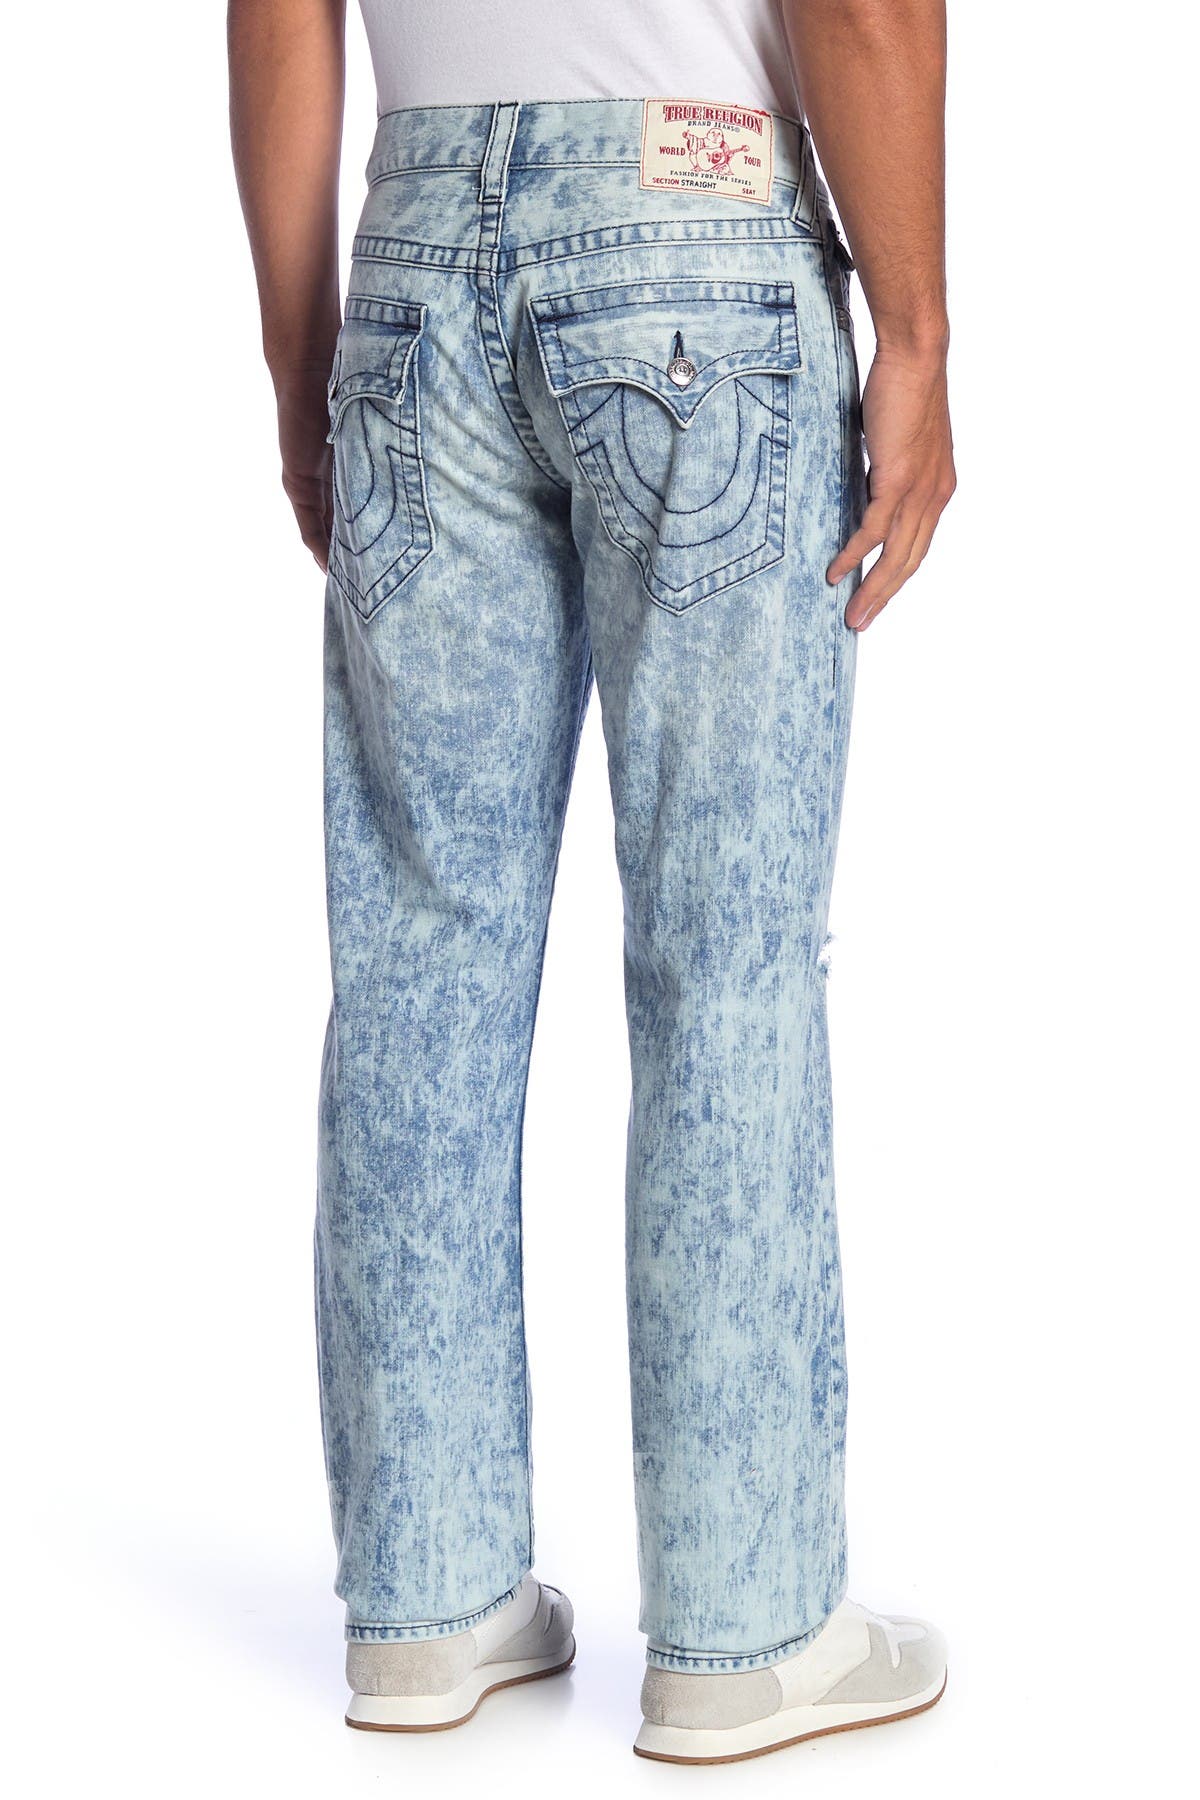 true religion jeans distressed